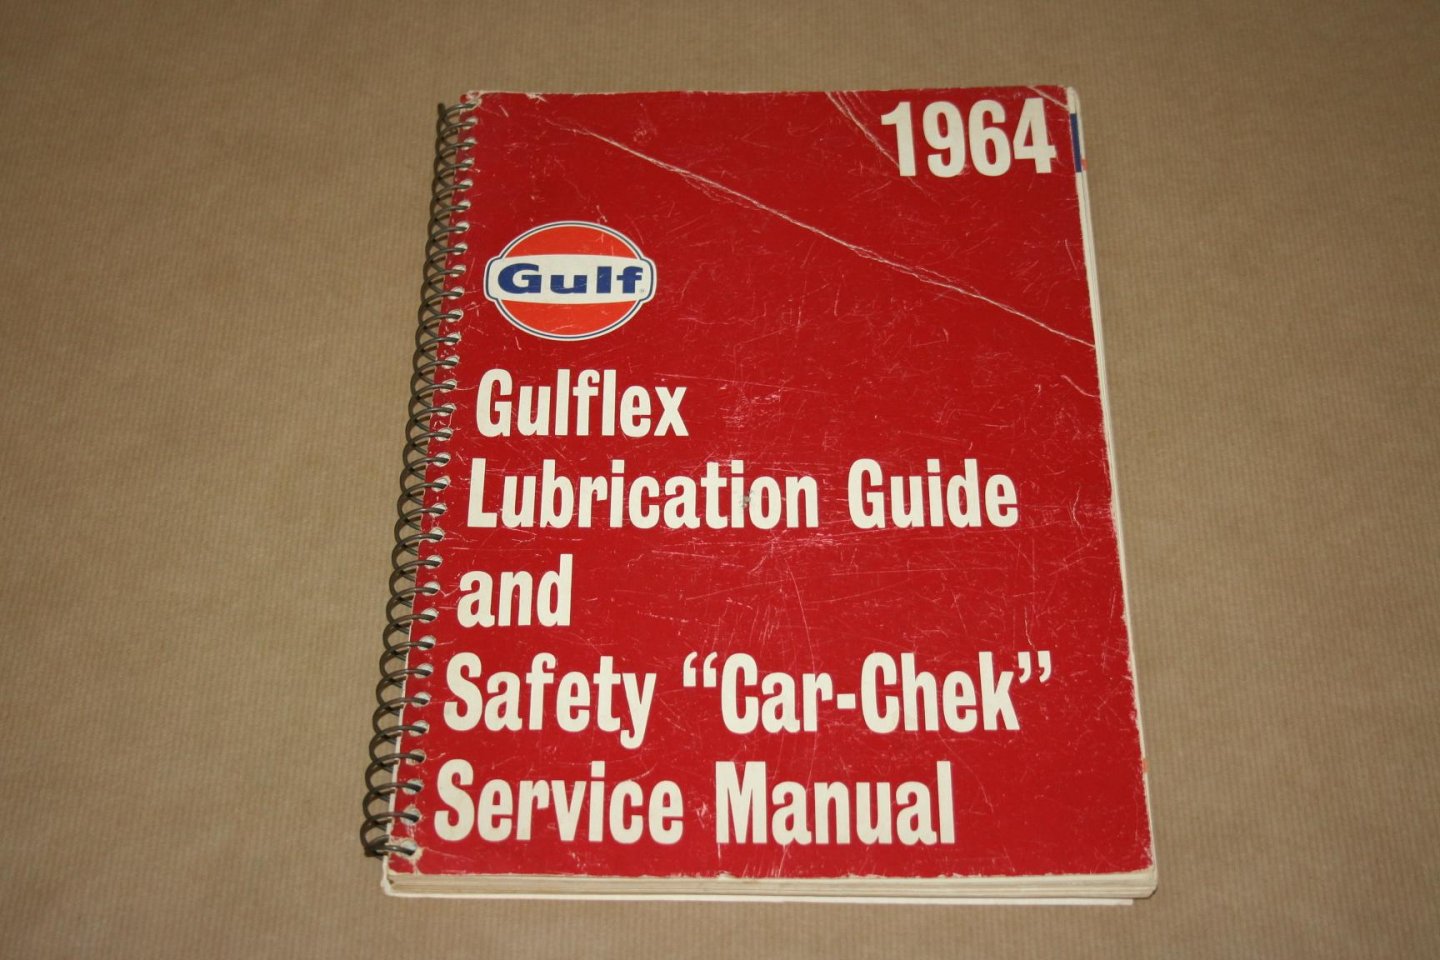  - Gulflex Lubrication Guide & Safety Car-Check Service Manual - 1964